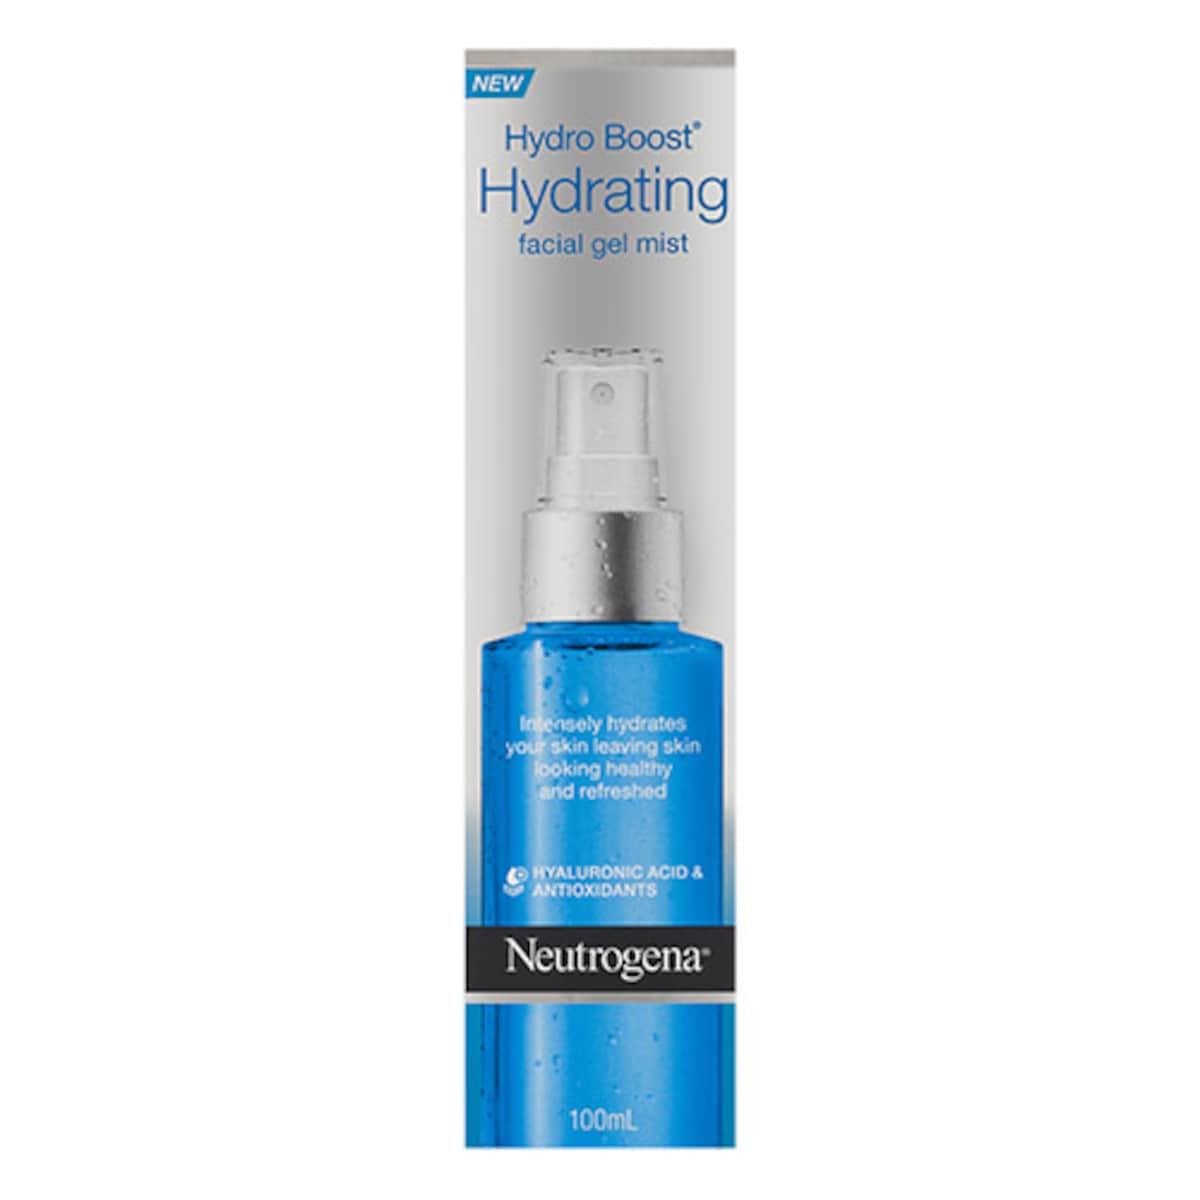 Neutrogena Hydro Boost Hydrating Facial Mist 100ml